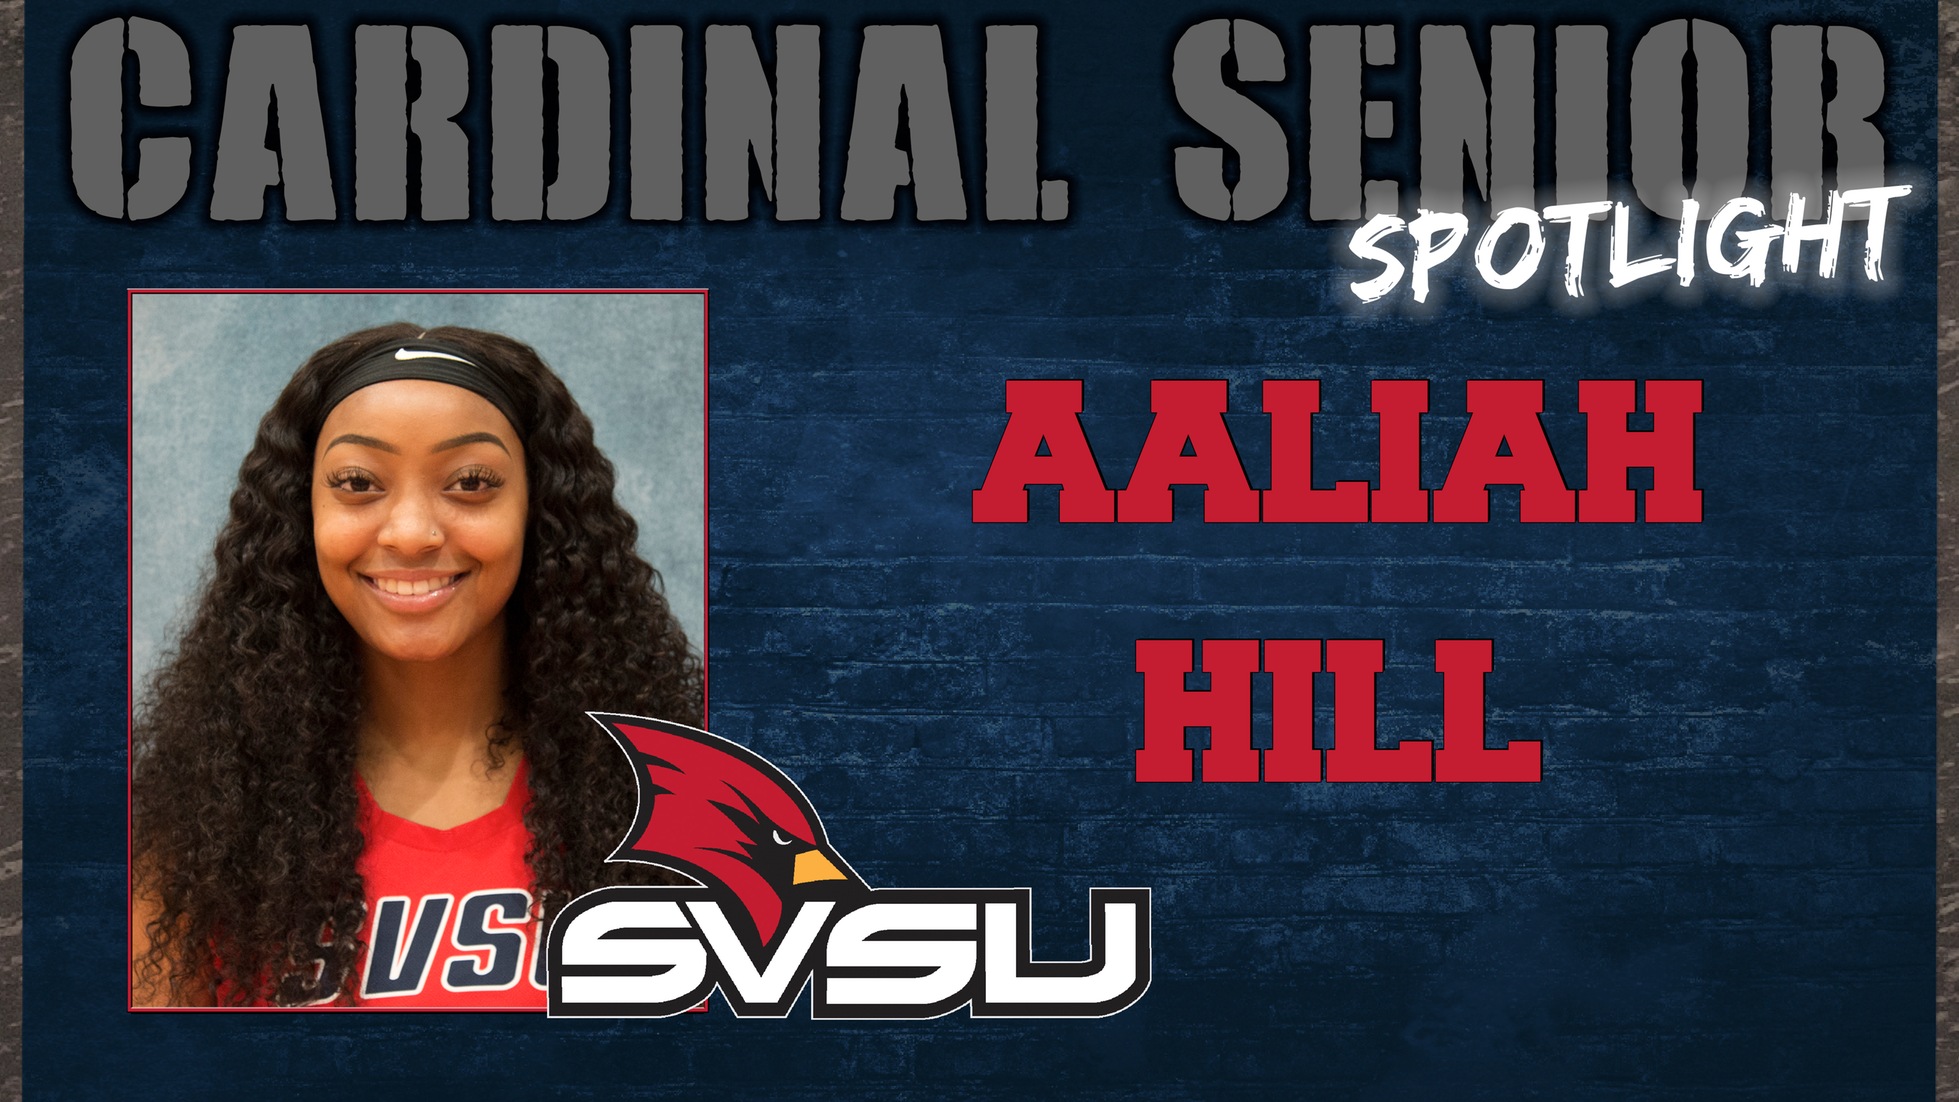 SVSU Cardinal Senior Spotlight - Aaliah Hill